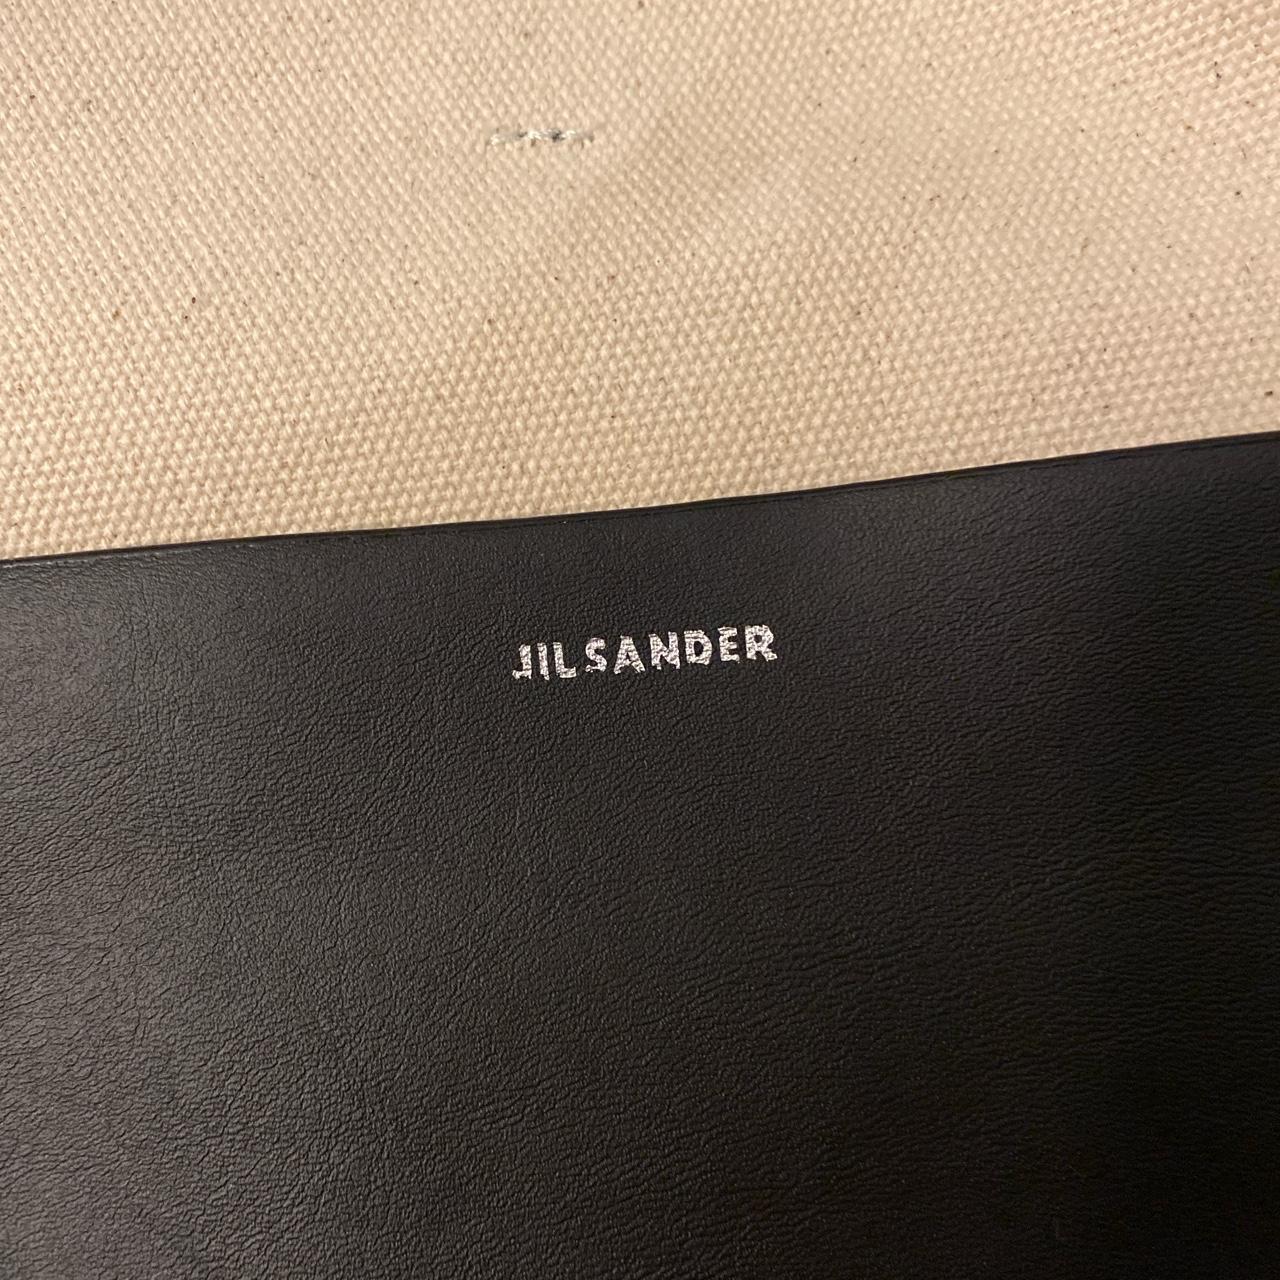 Jil Sander Women's Cream and Black Bag (2)